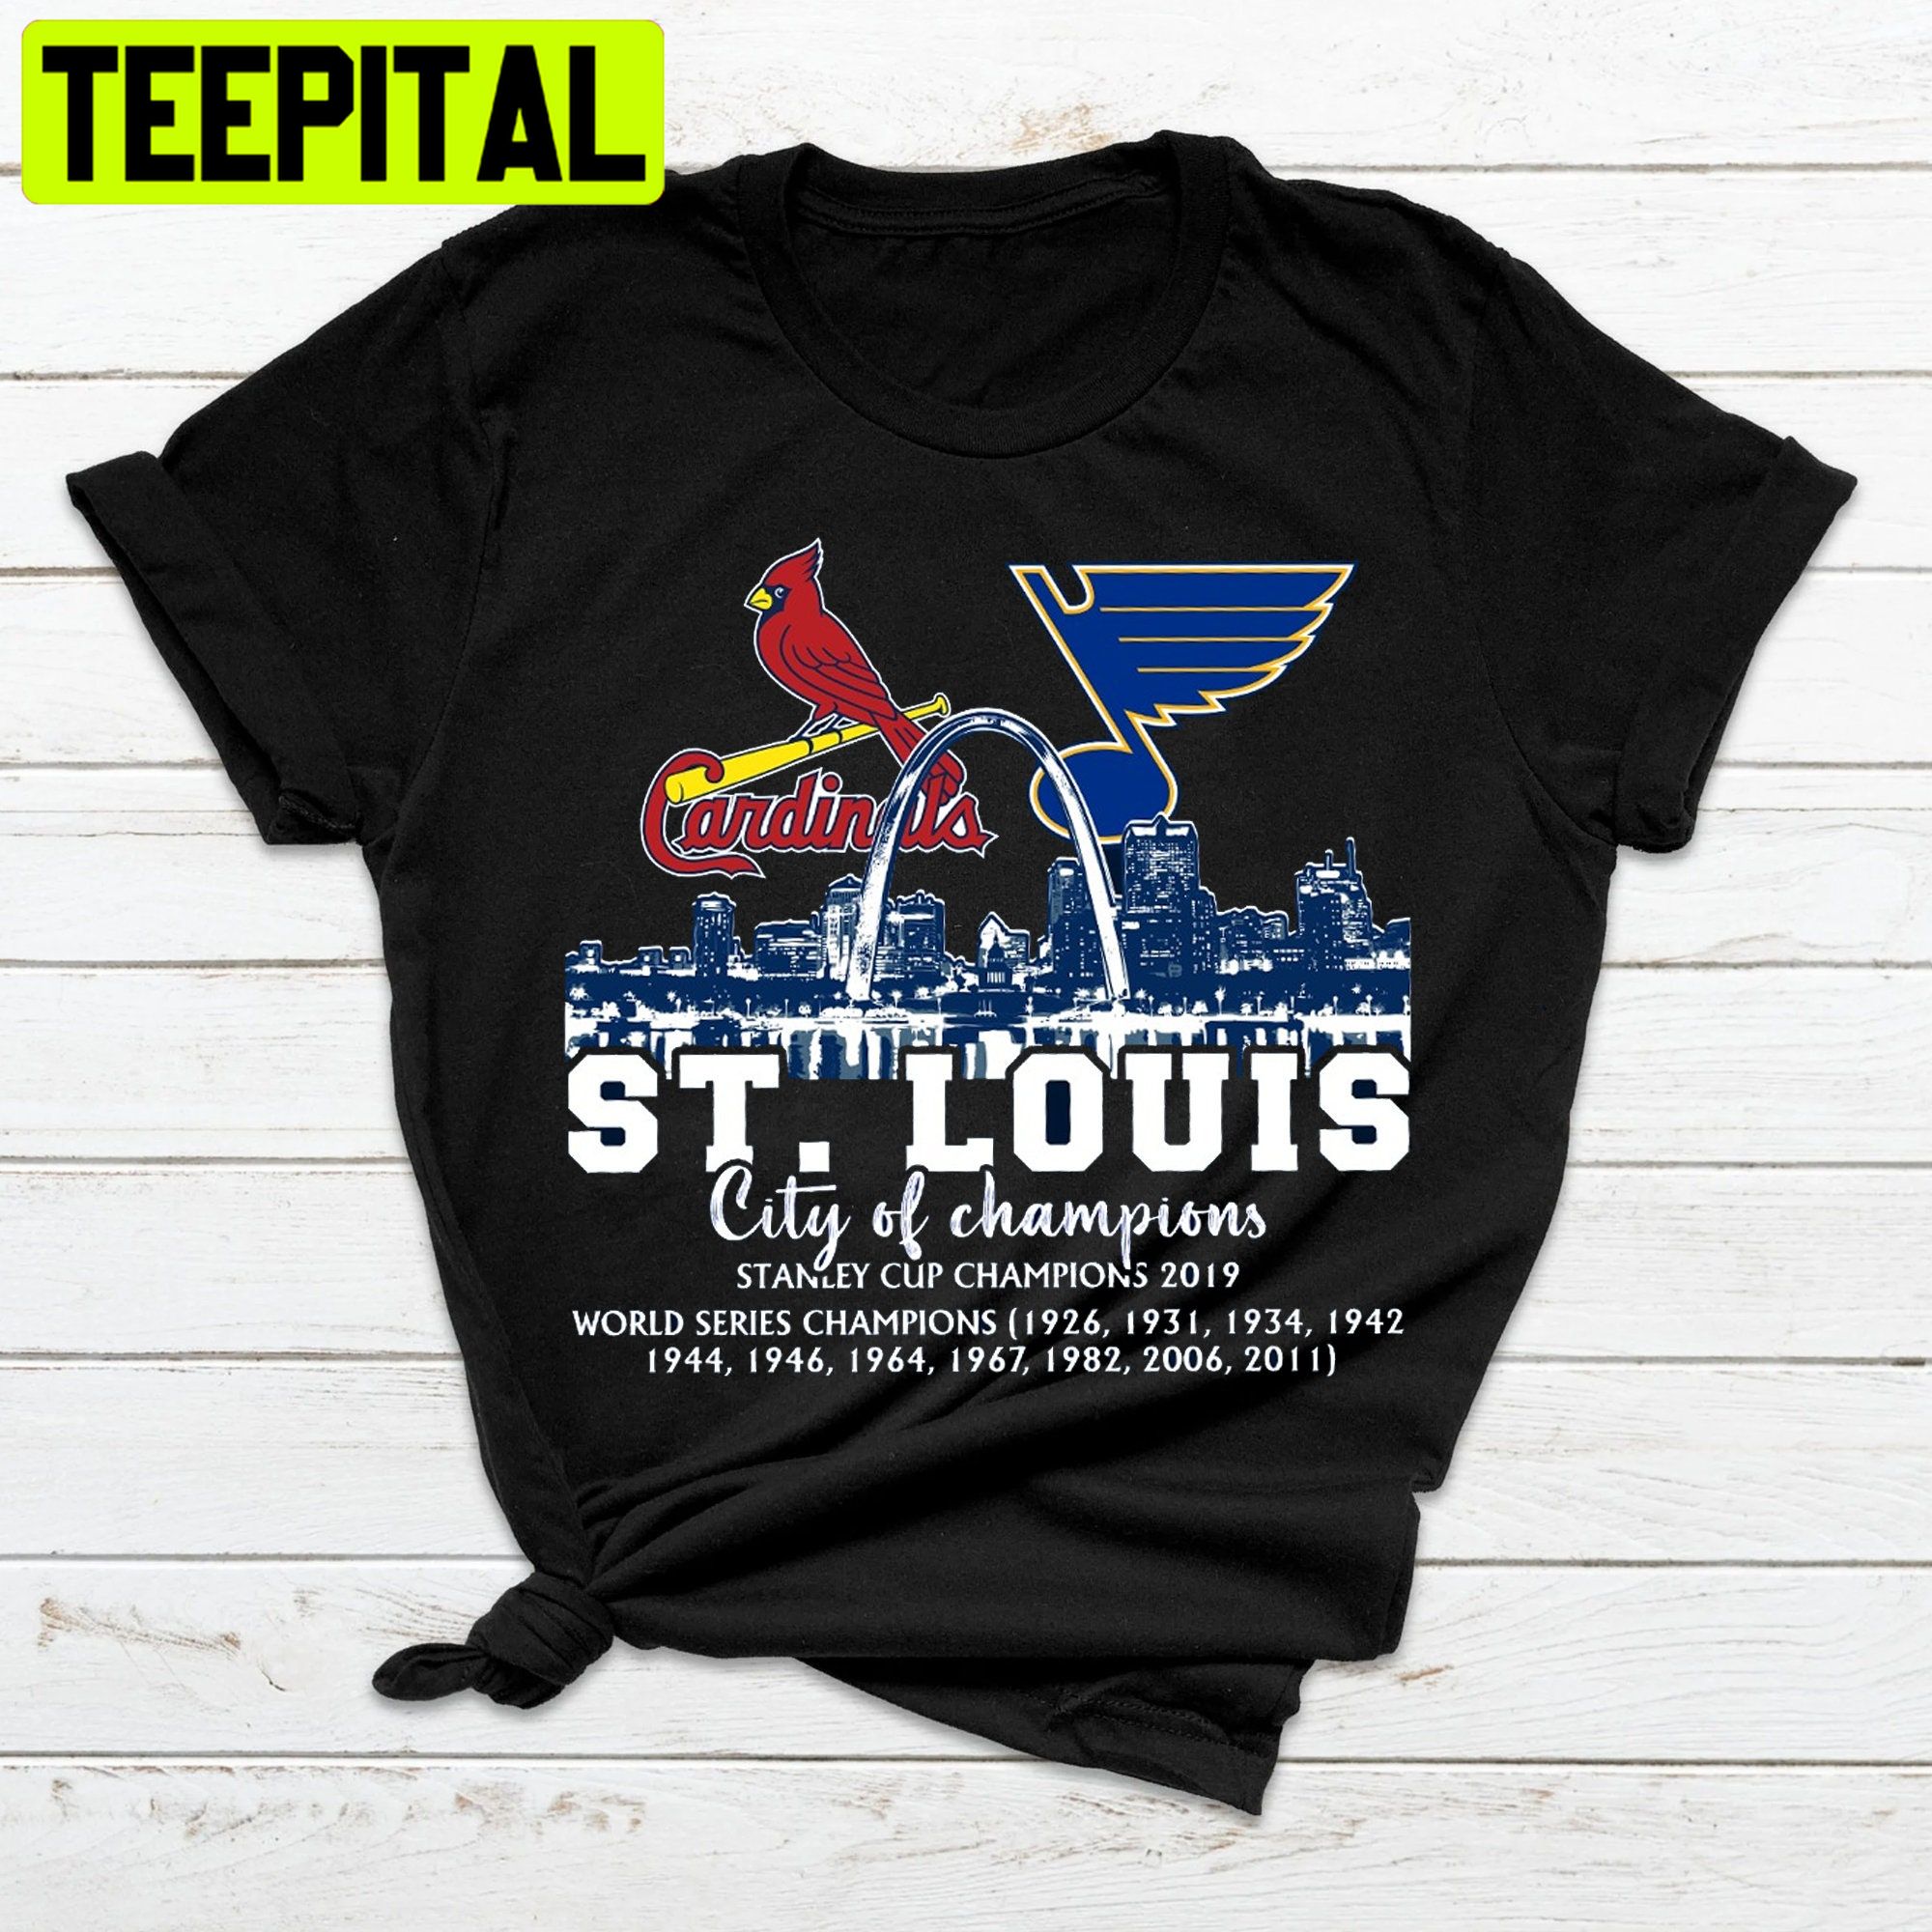 St. Louis Cardinals Merchandise, St. Louis Cardinals T-Shirts, Apparel